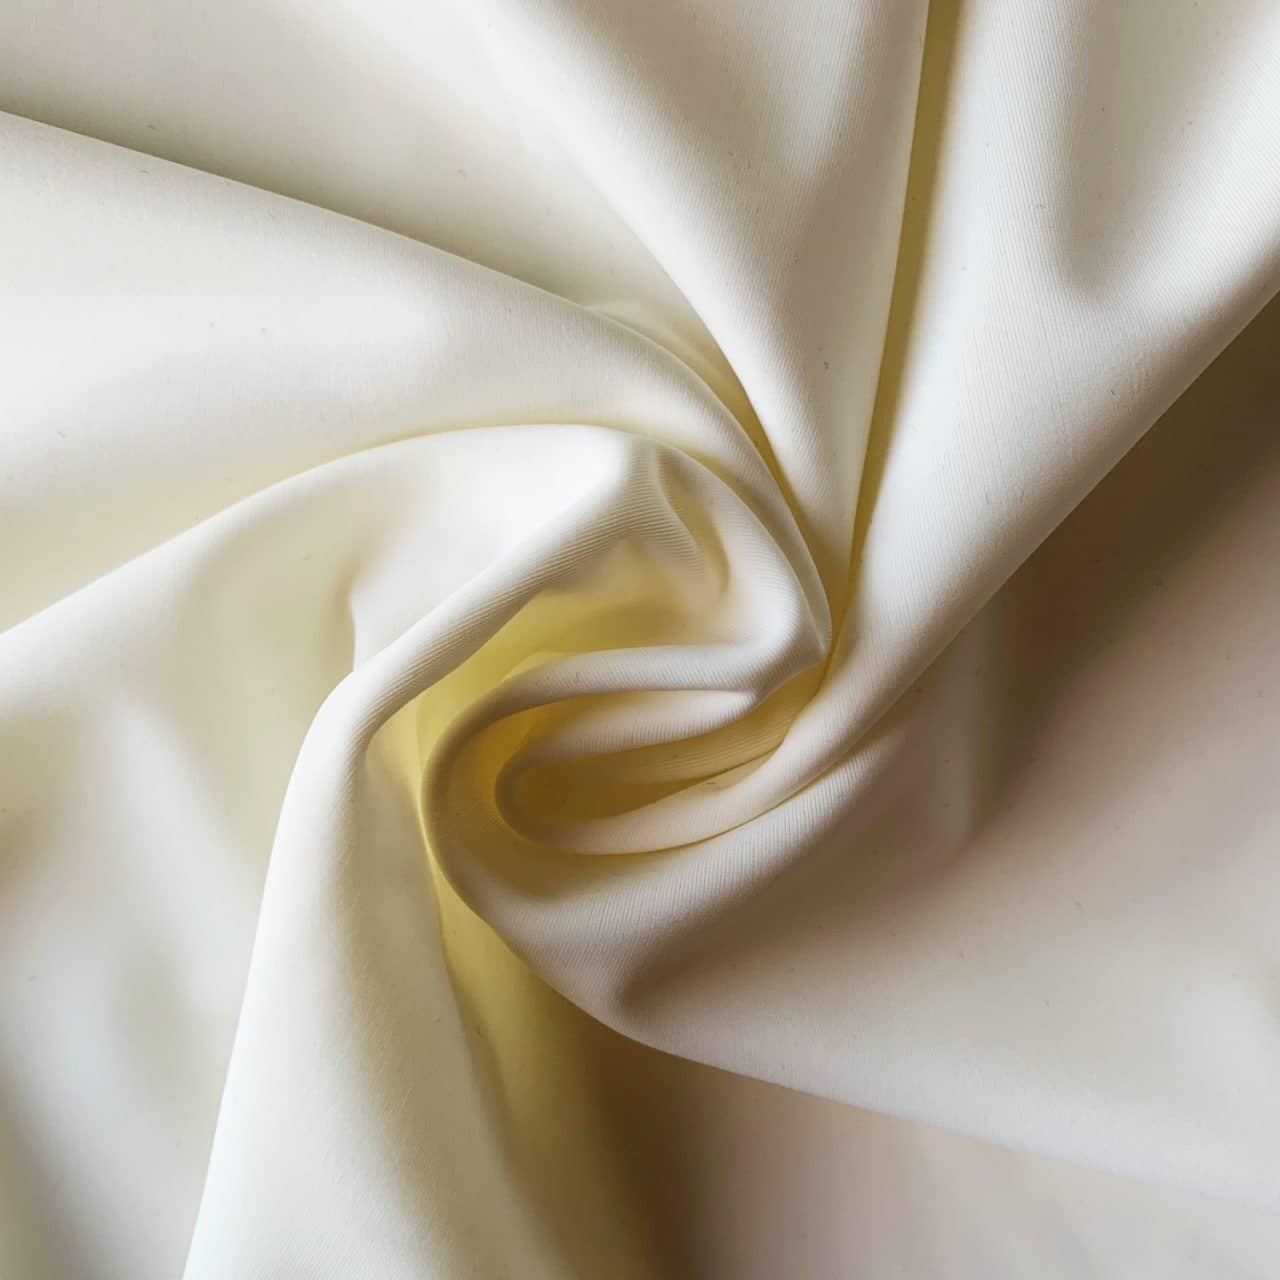 https://www.solidstonefabrics.com/wp-content/uploads/2018/07/Carvico-Matte-Nylon-Lycra-Fabric-Avorio-Off-White-Nylon-Lycra-Stretch-Fabric-For-Swimwear-Solid-Stone-Fabrics-Inc..jpg